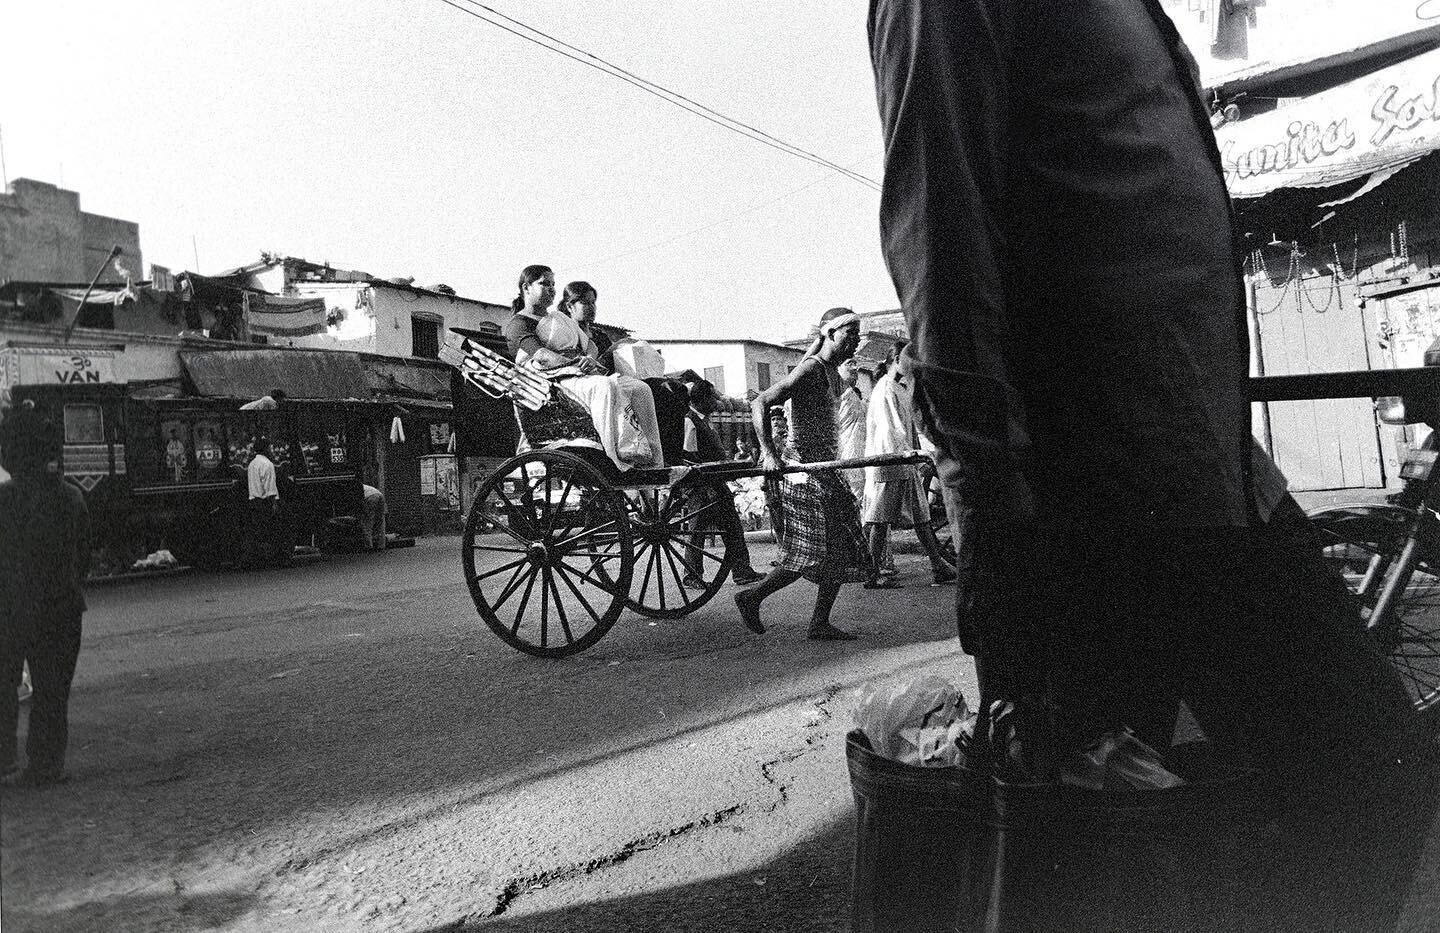 Calcutta, India, 2001.⁠
⁠
⁠
⁠
#calcutta #india #bengal #westbengal #kolkata #city #streetphotography #rickshaw #handpulledrickshaw #rickshawpuller #jwbild